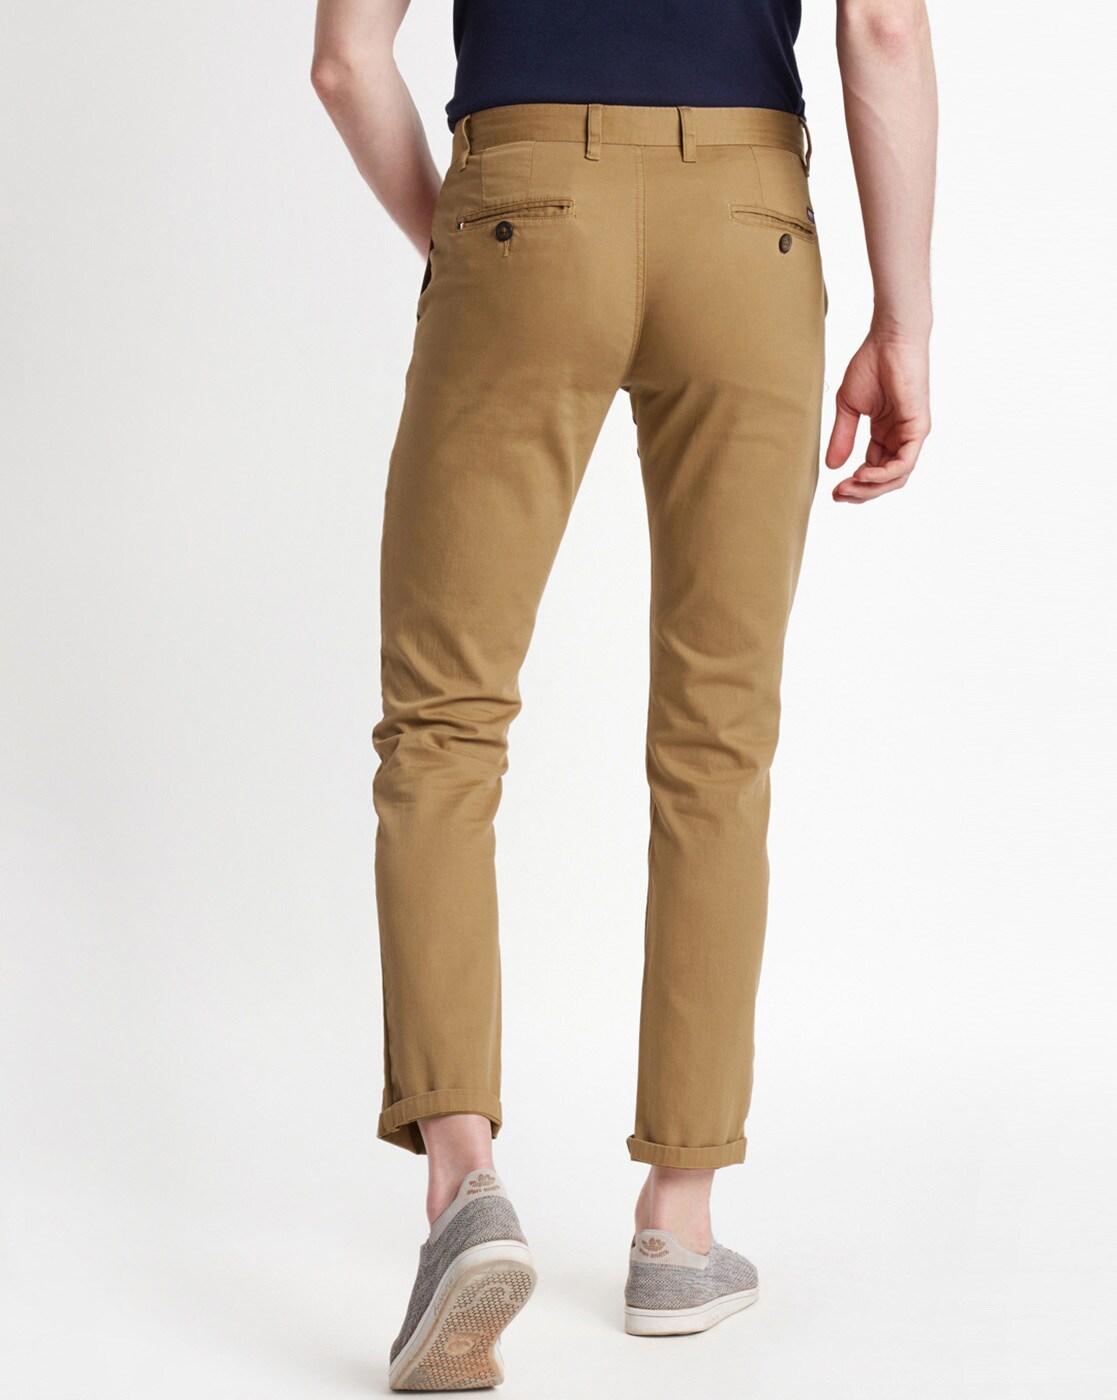 Jeans & Pants | Cream Colour Pant Byford 34 | Freeup